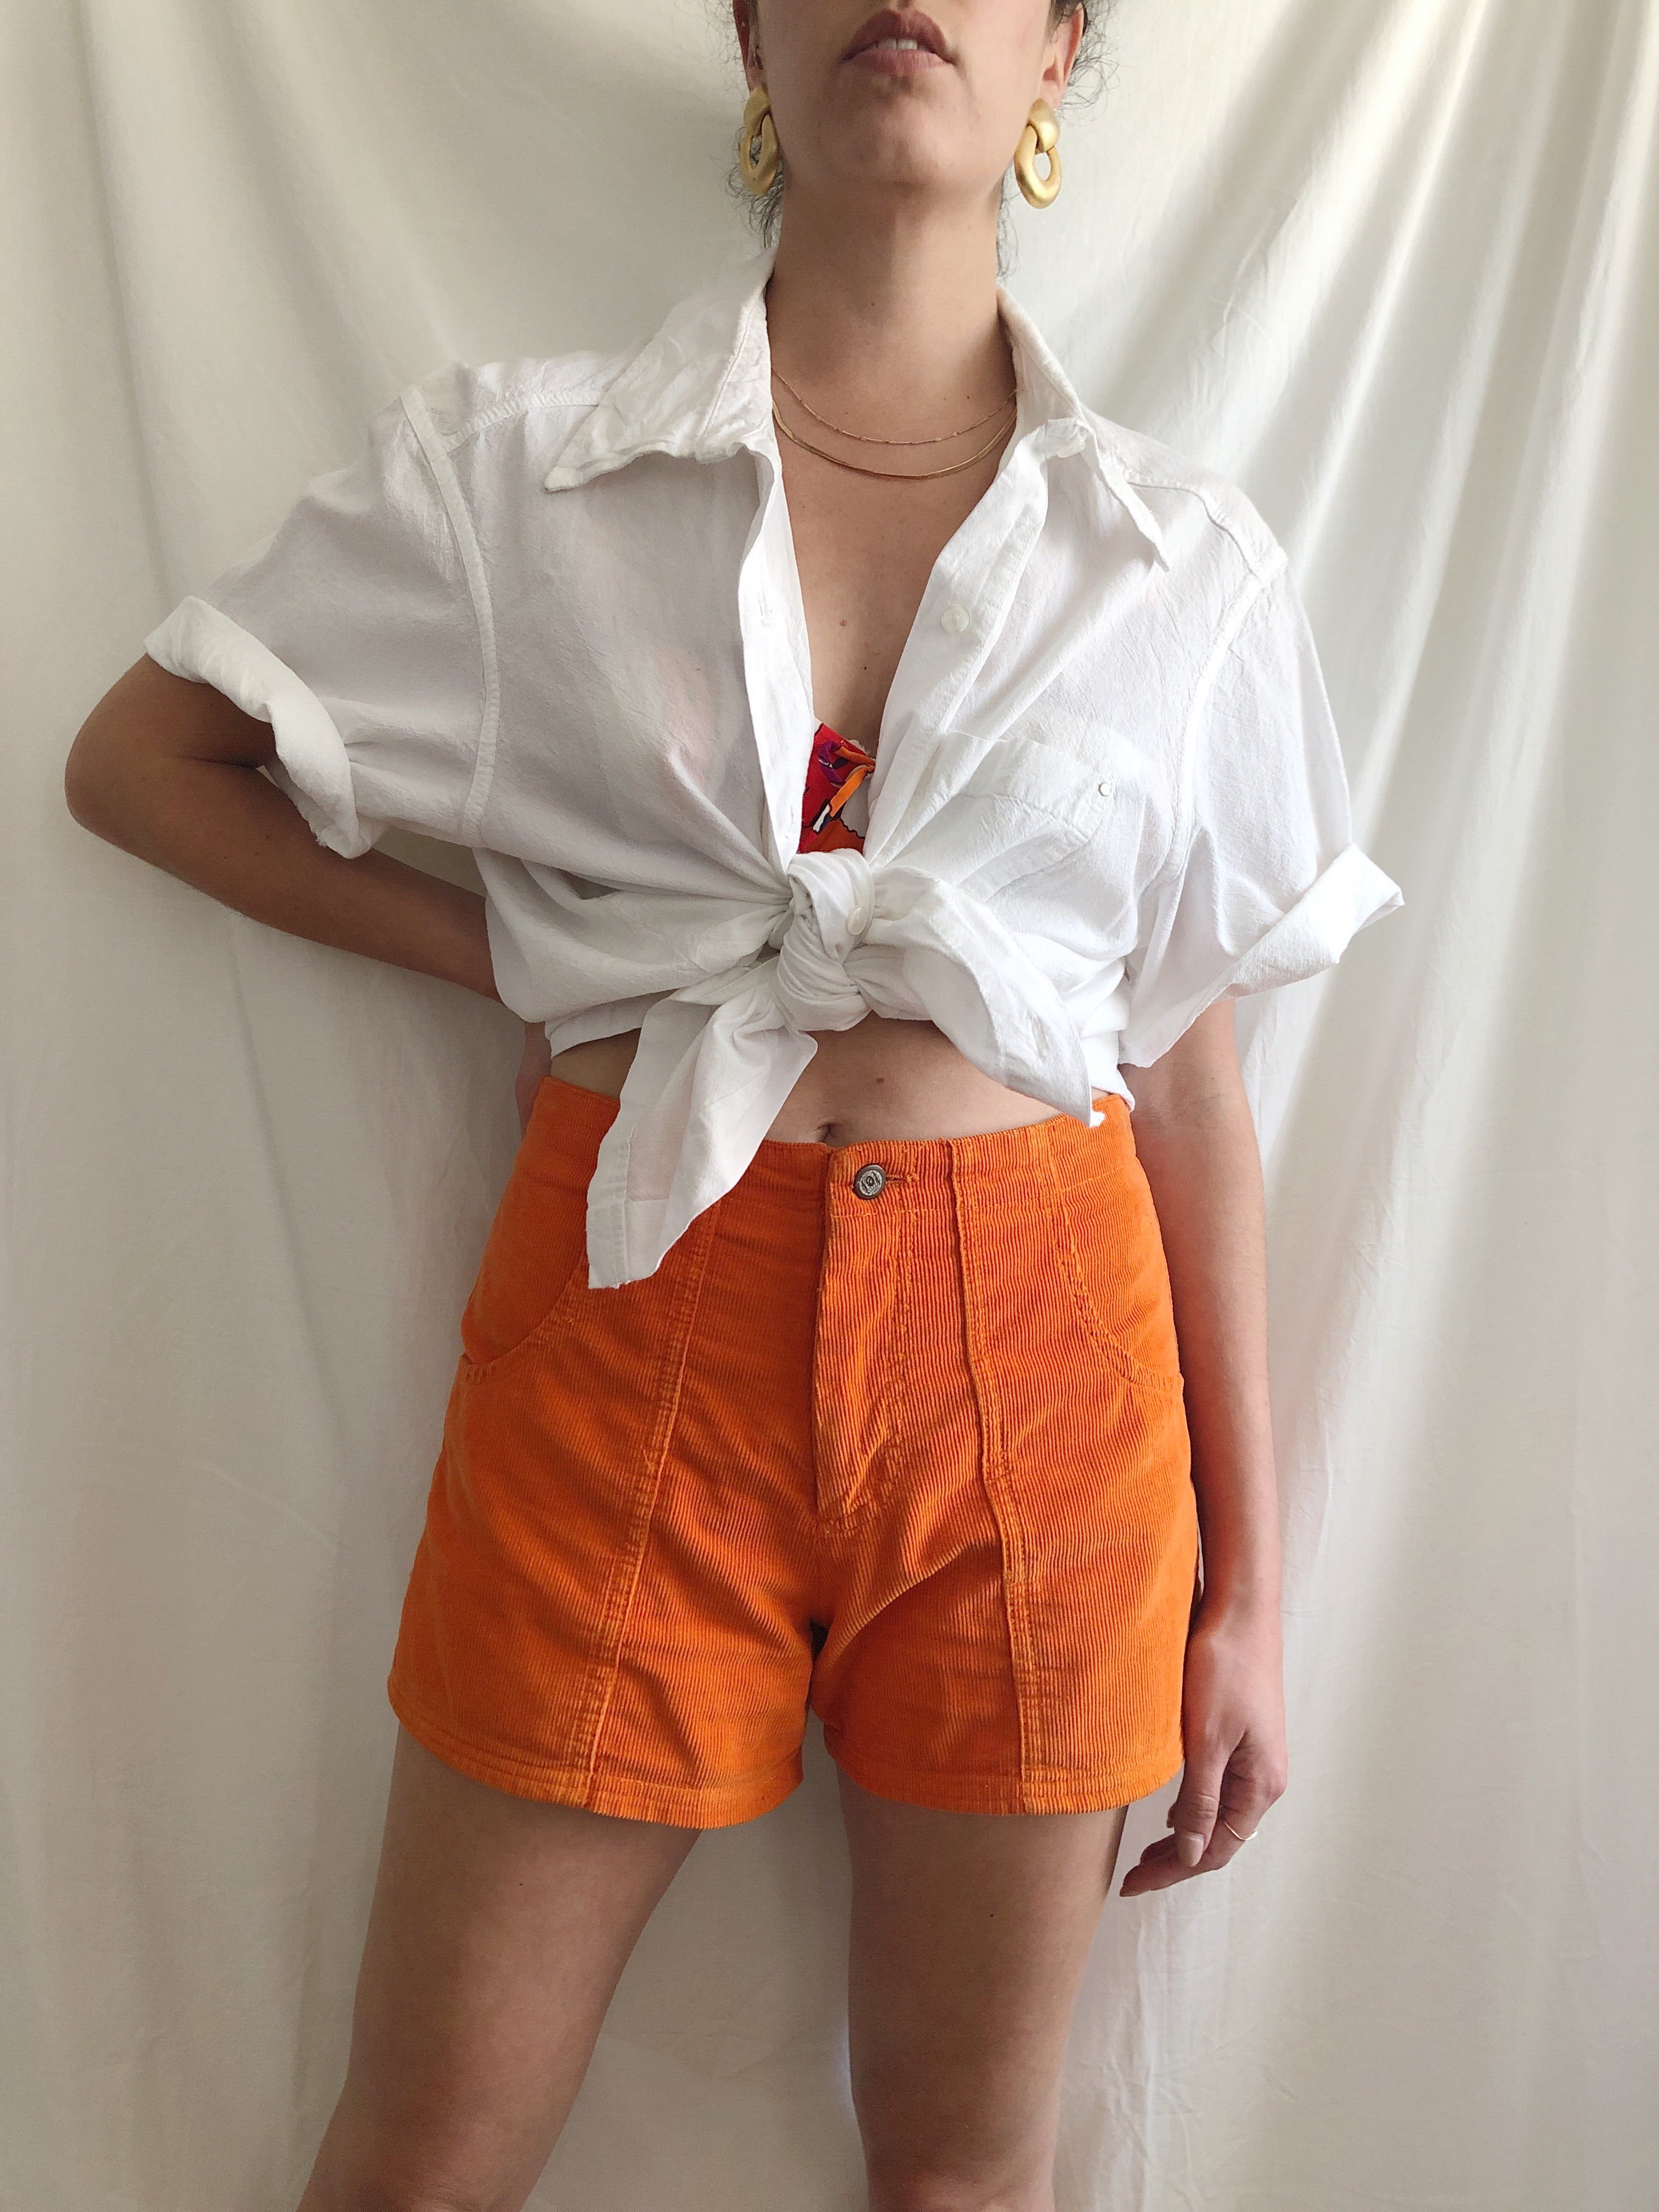 Tangerine Corduroy Short :: 28 waist